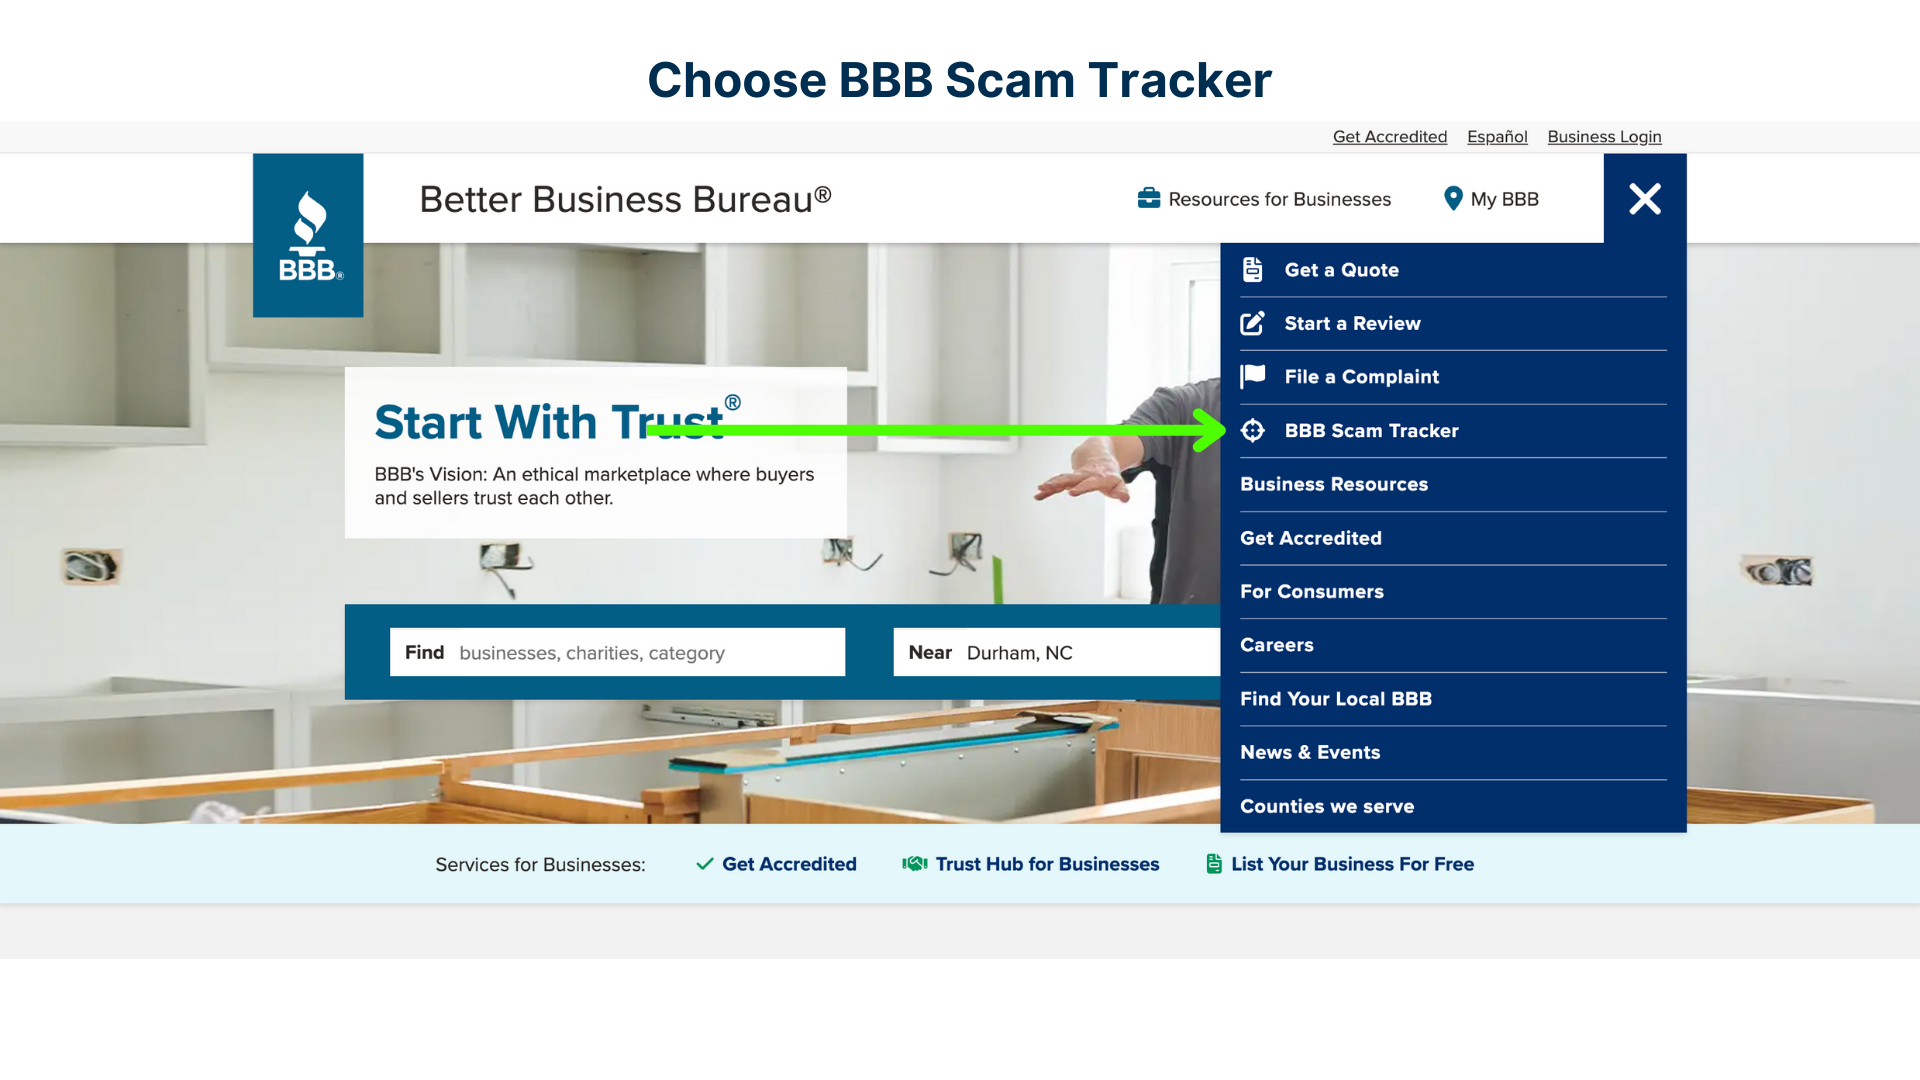 BBB Scam Tracker Link